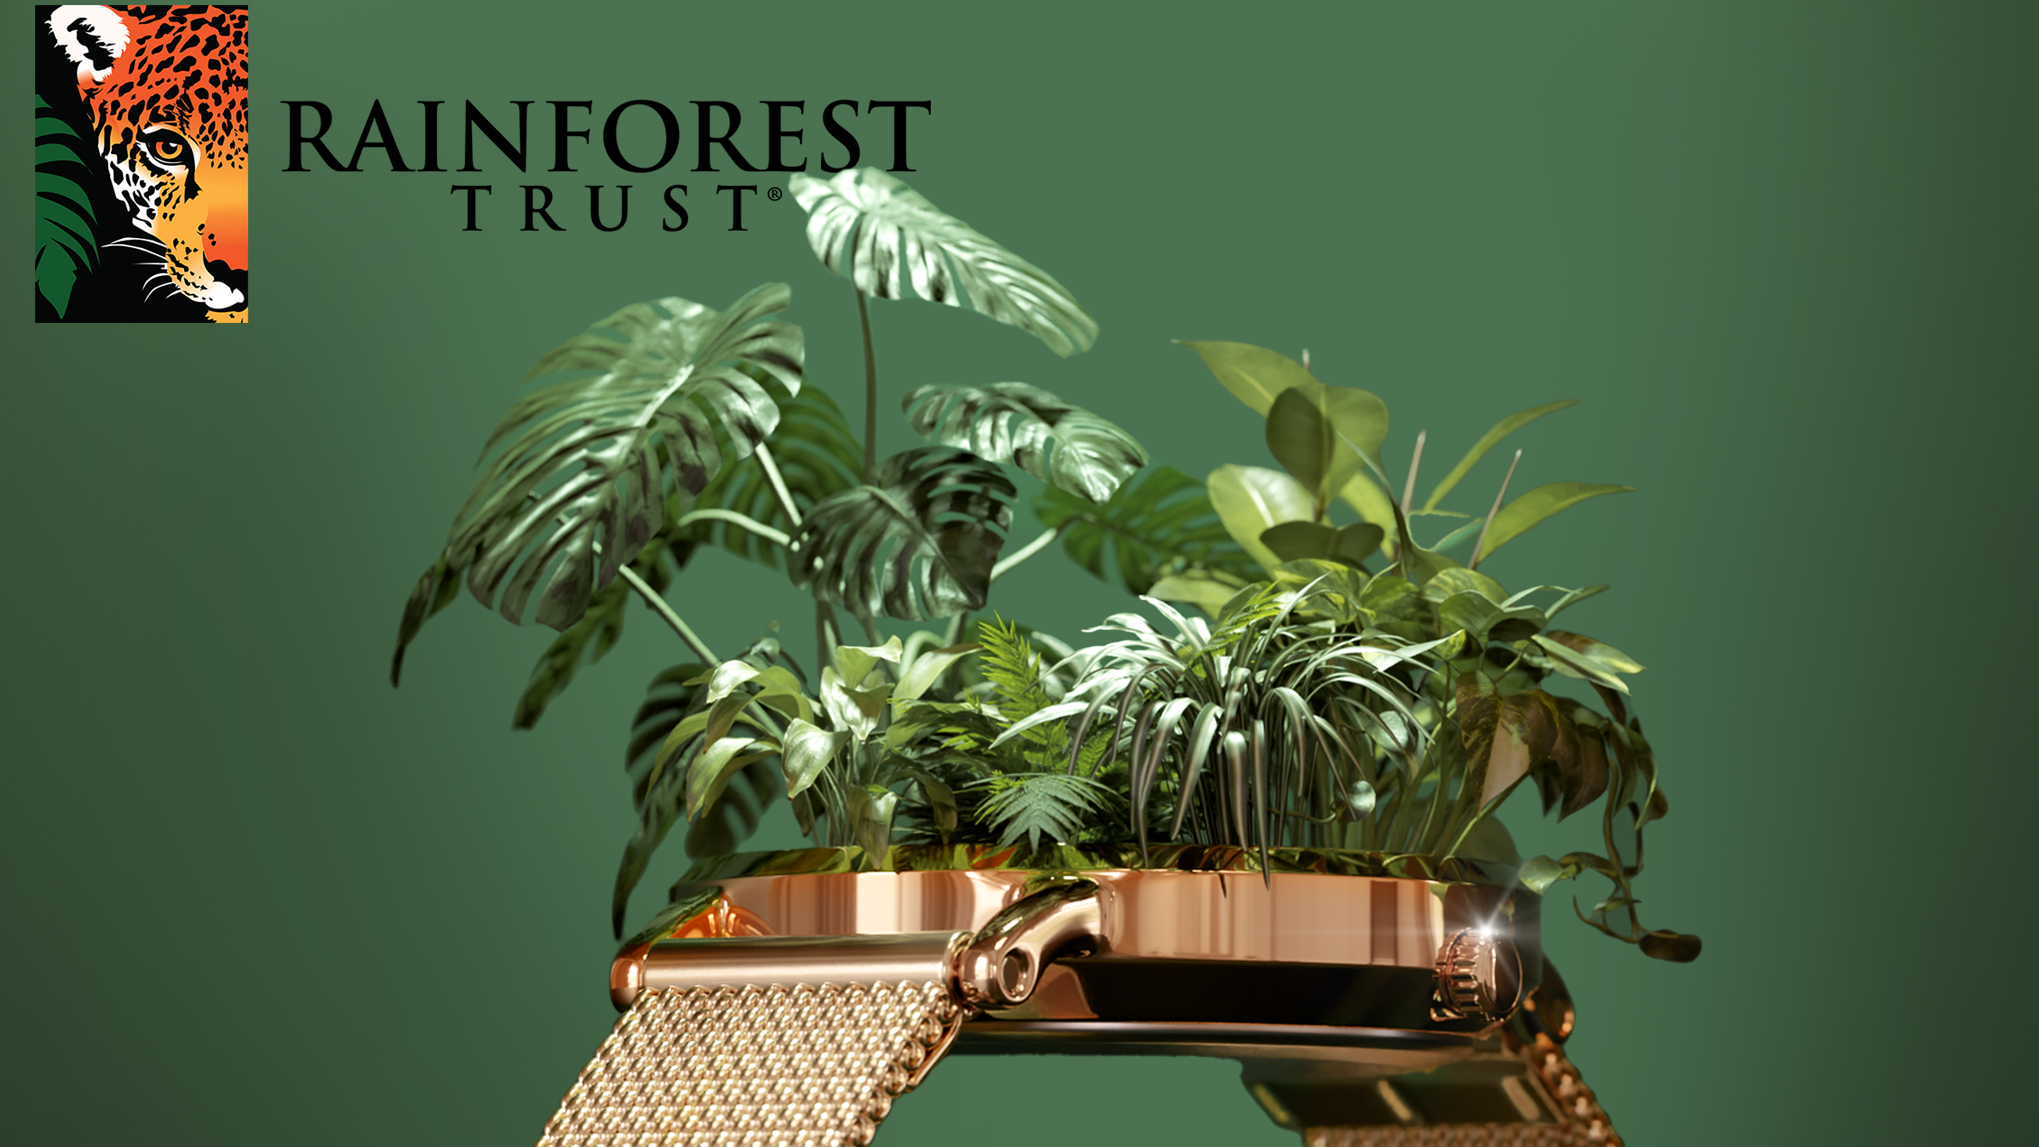 Rainforest trust partnership